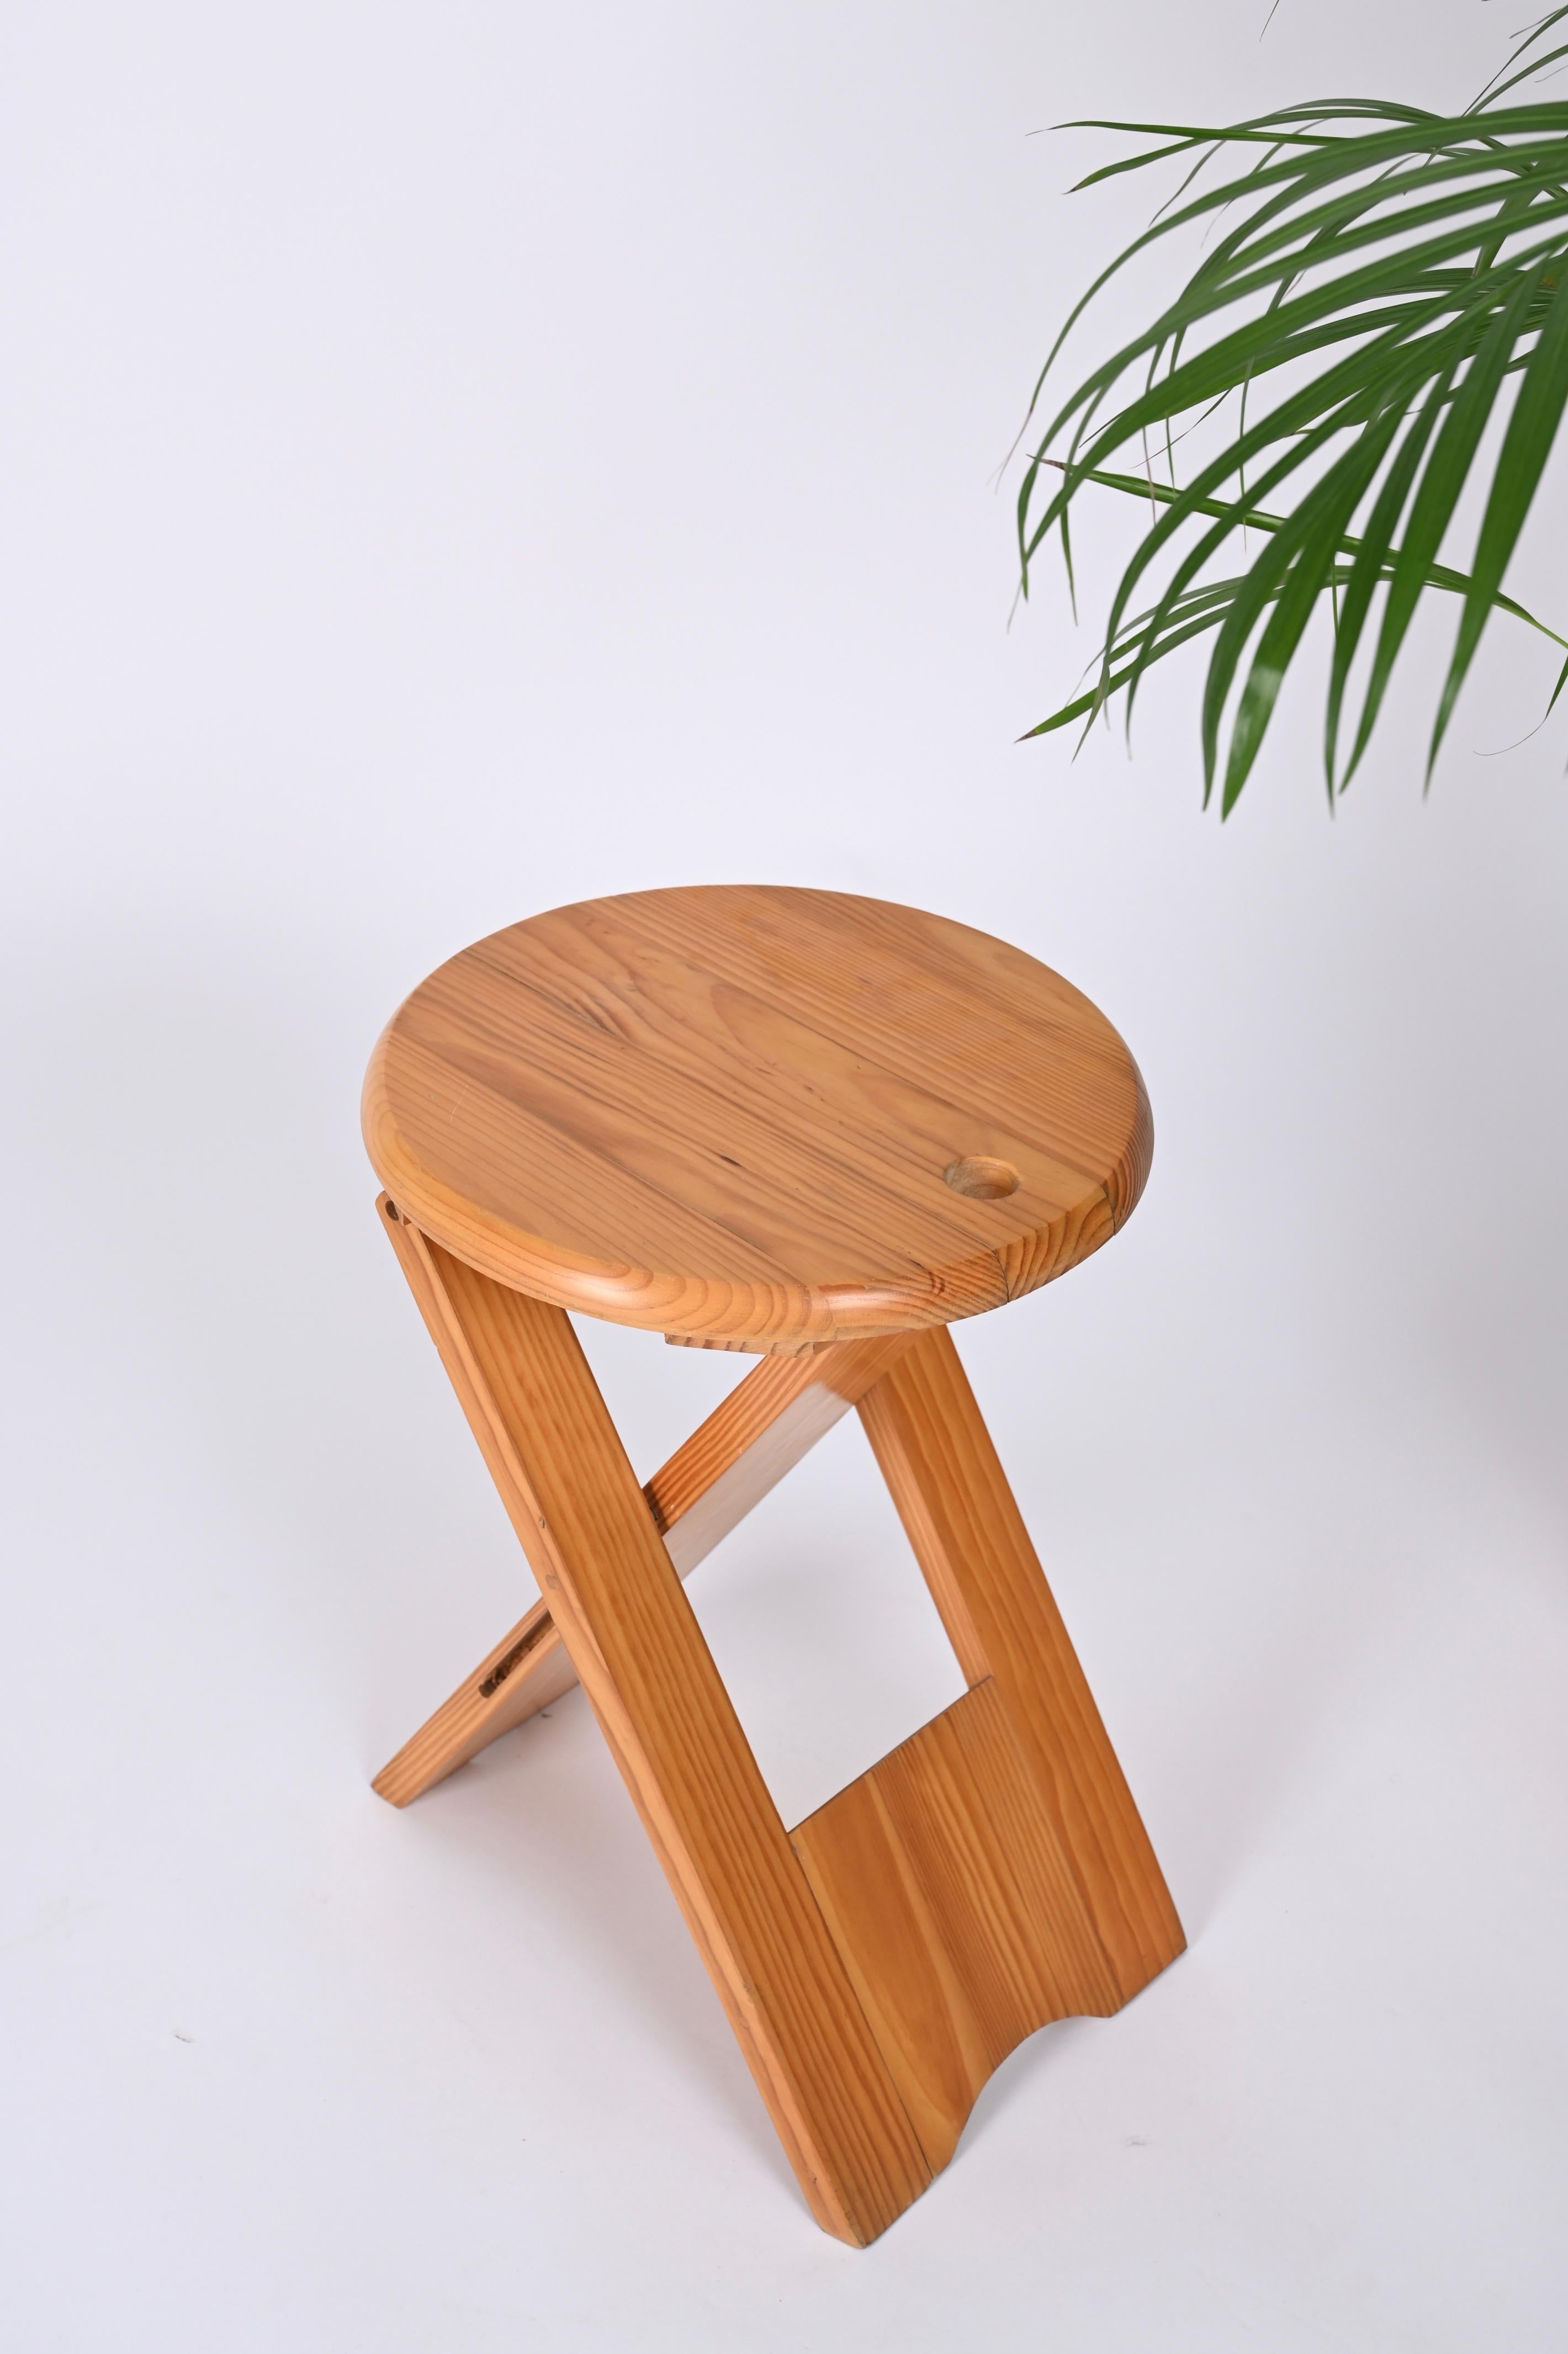 roger tallon folding stool